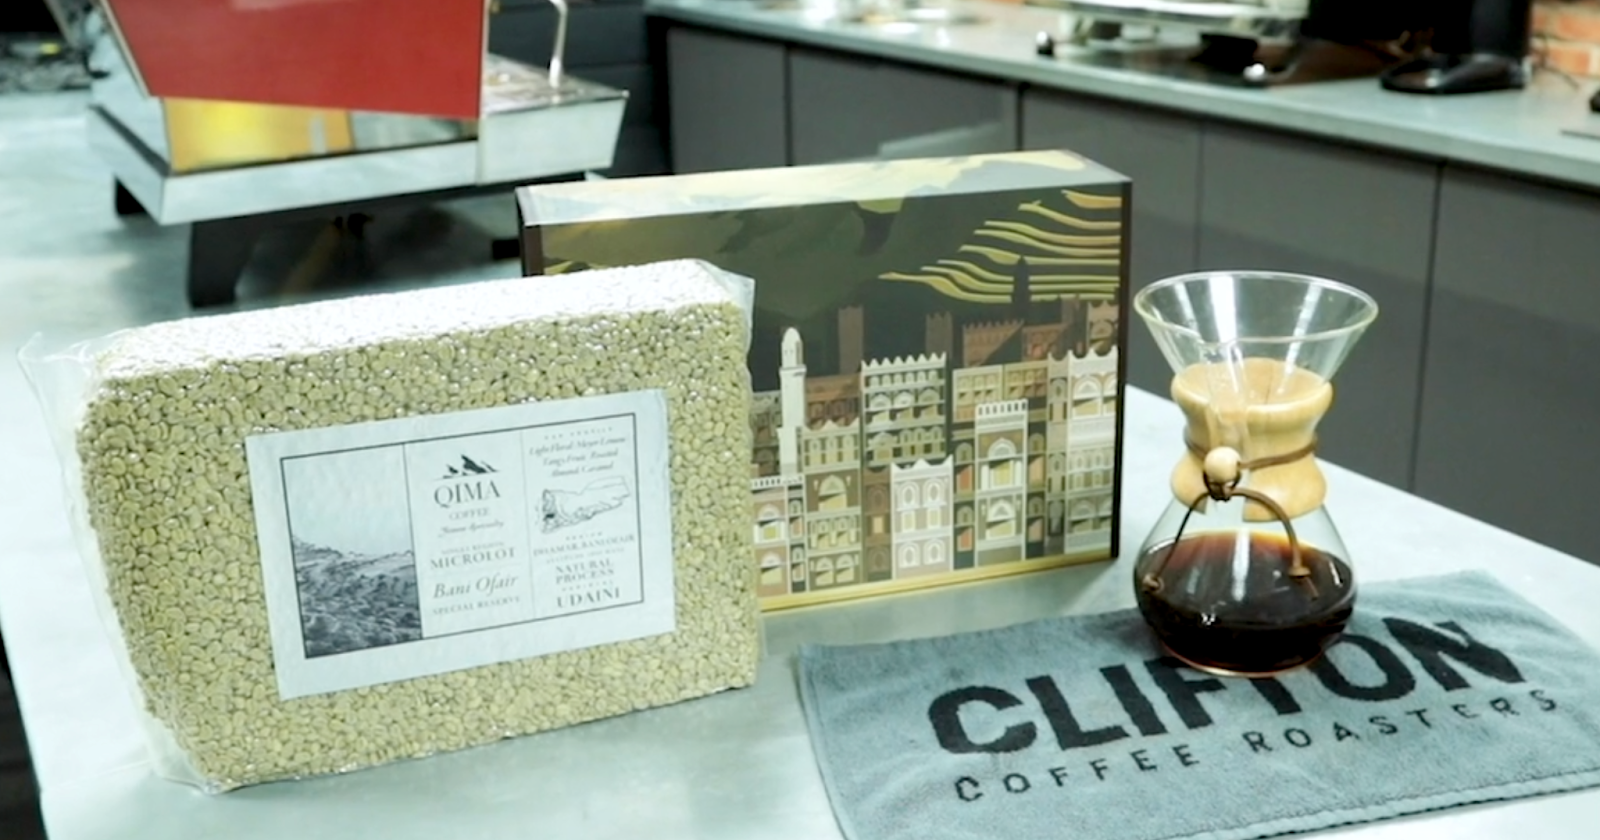 Clifton Coffee 